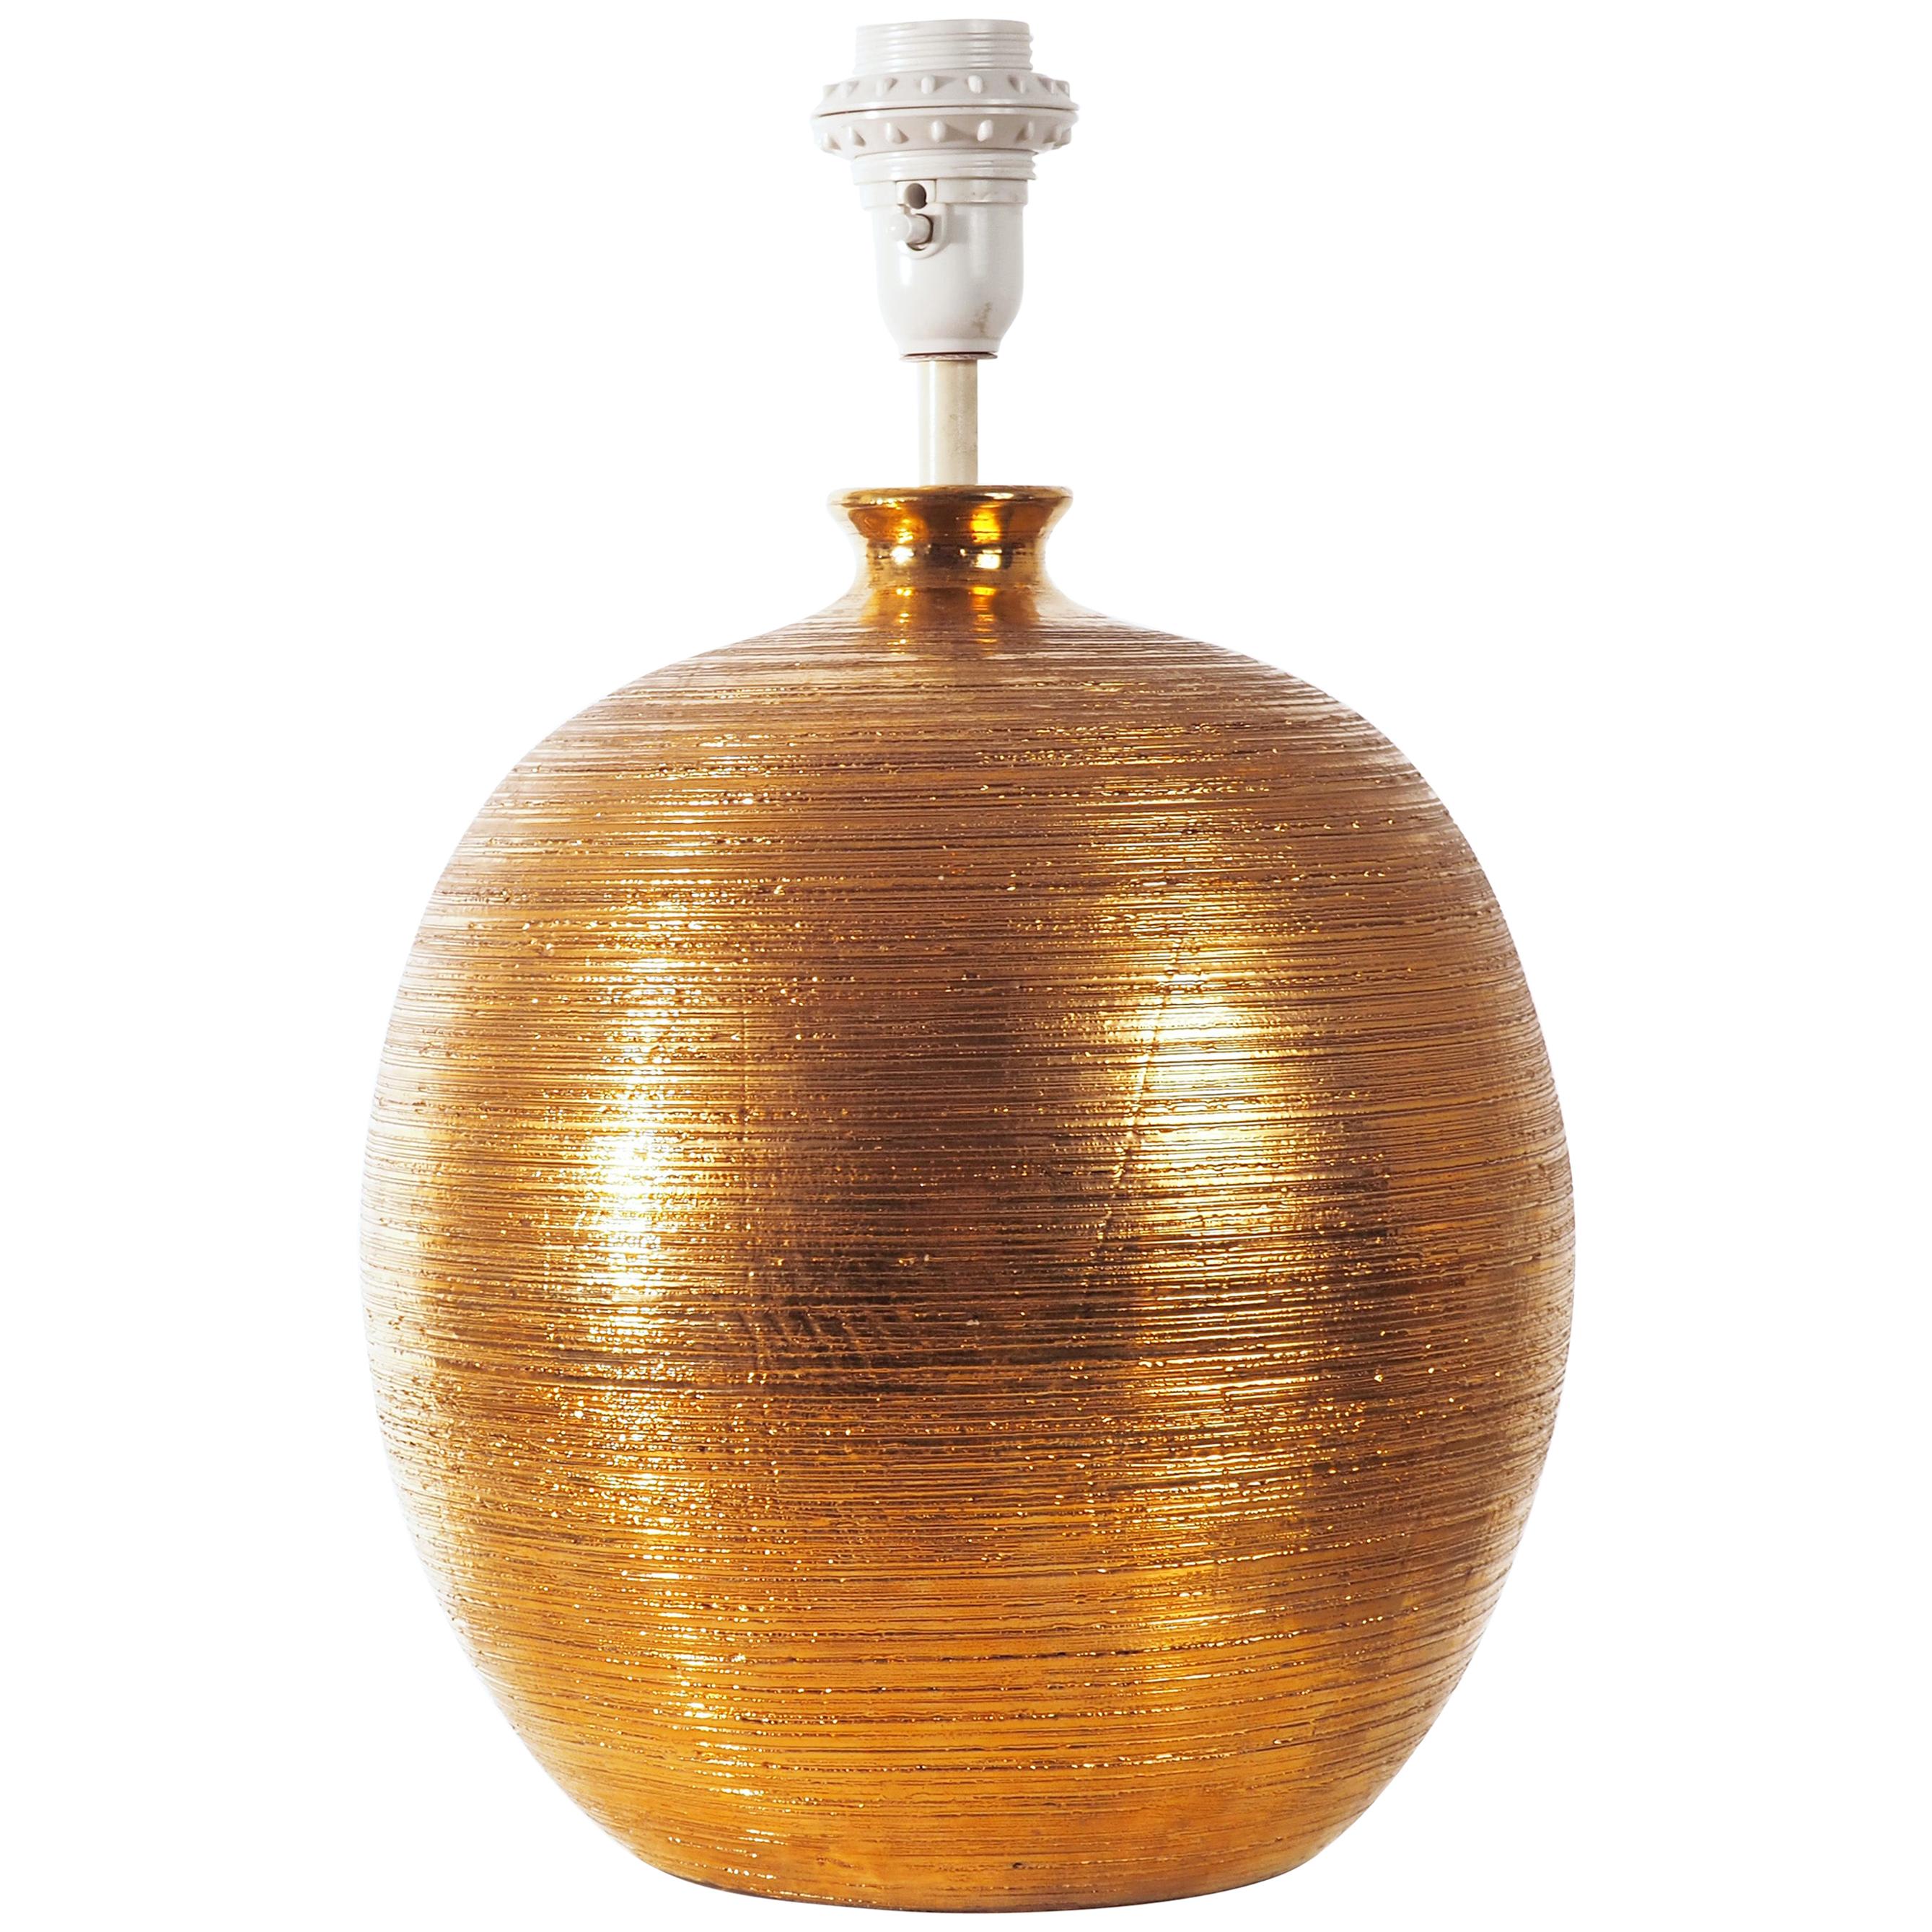 Golden glazed ceramic Lamp Base by Bitossi, Italy